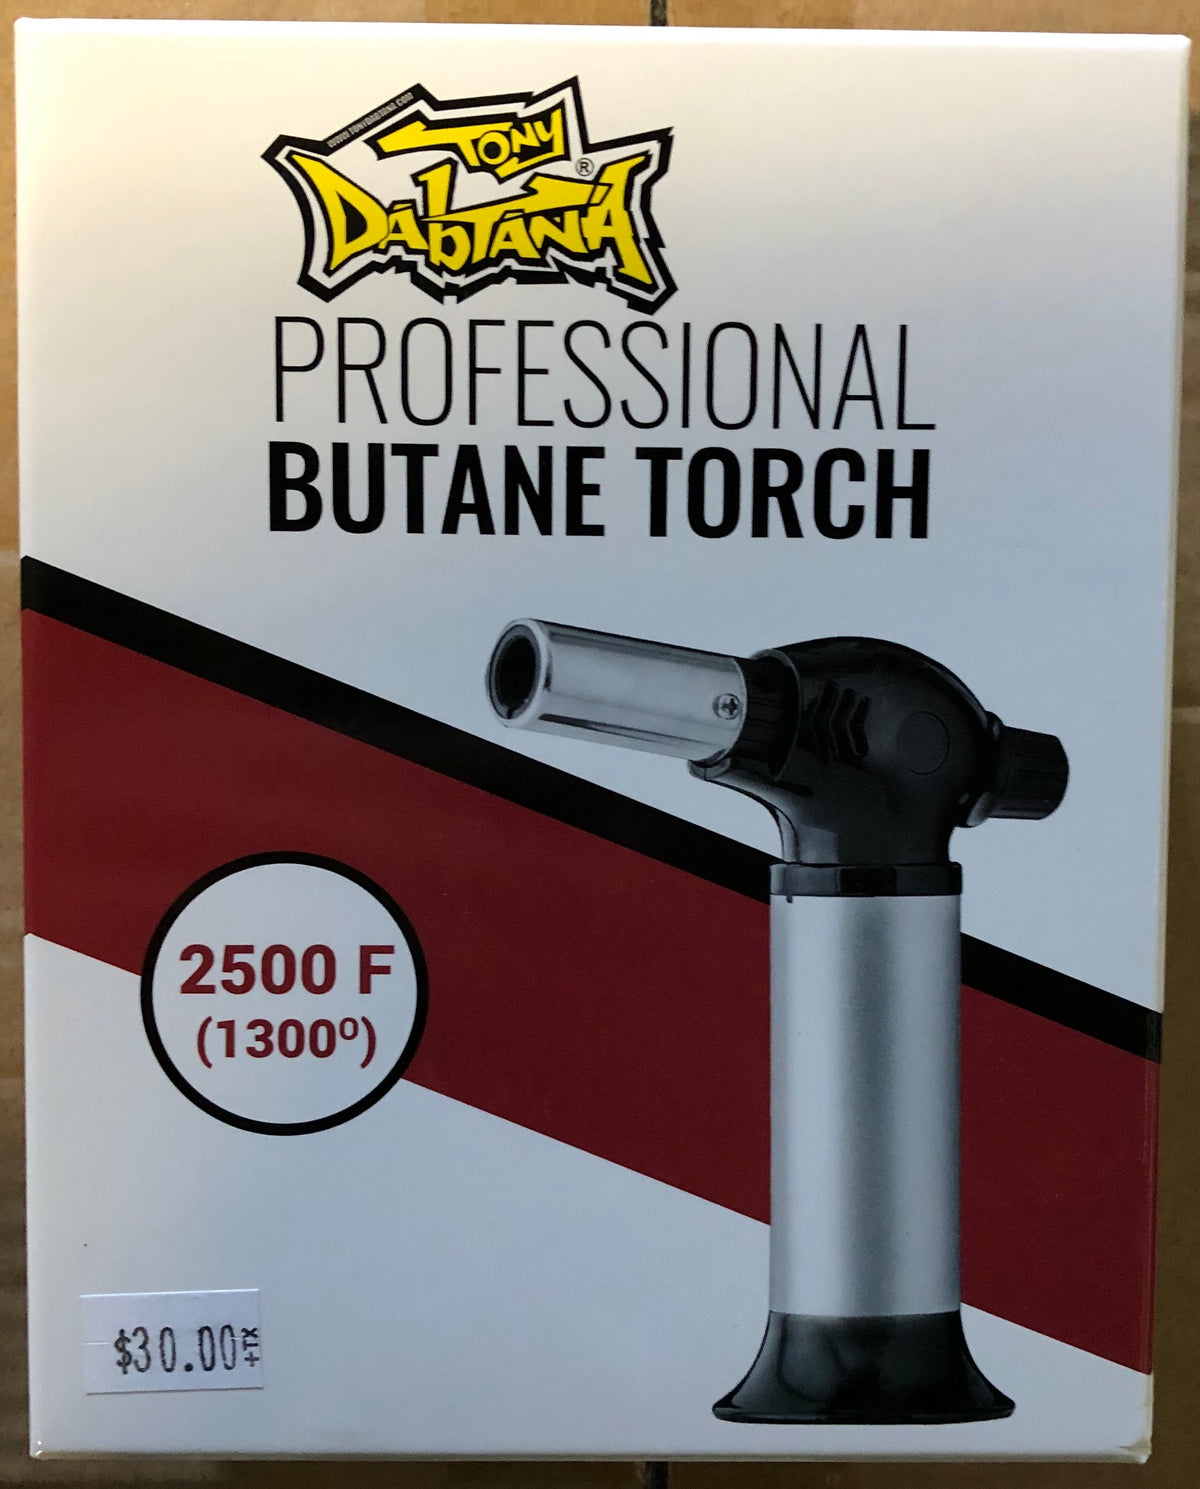 Tony Dabtana Professional Butane Torch